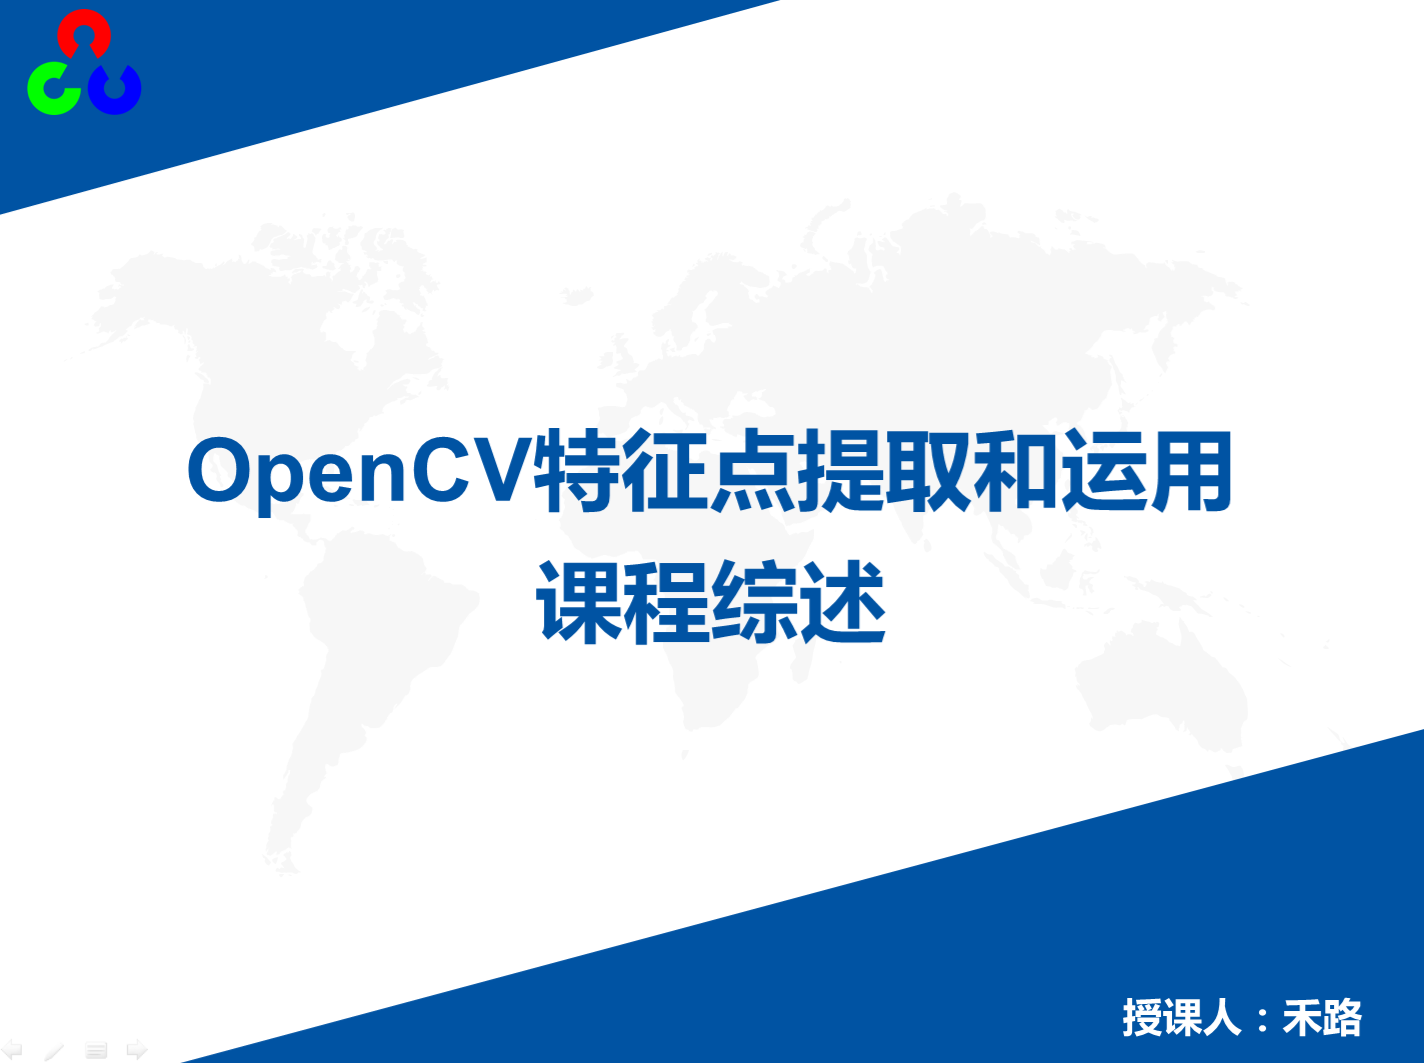 OpenCV特征点提取和运用视频课程